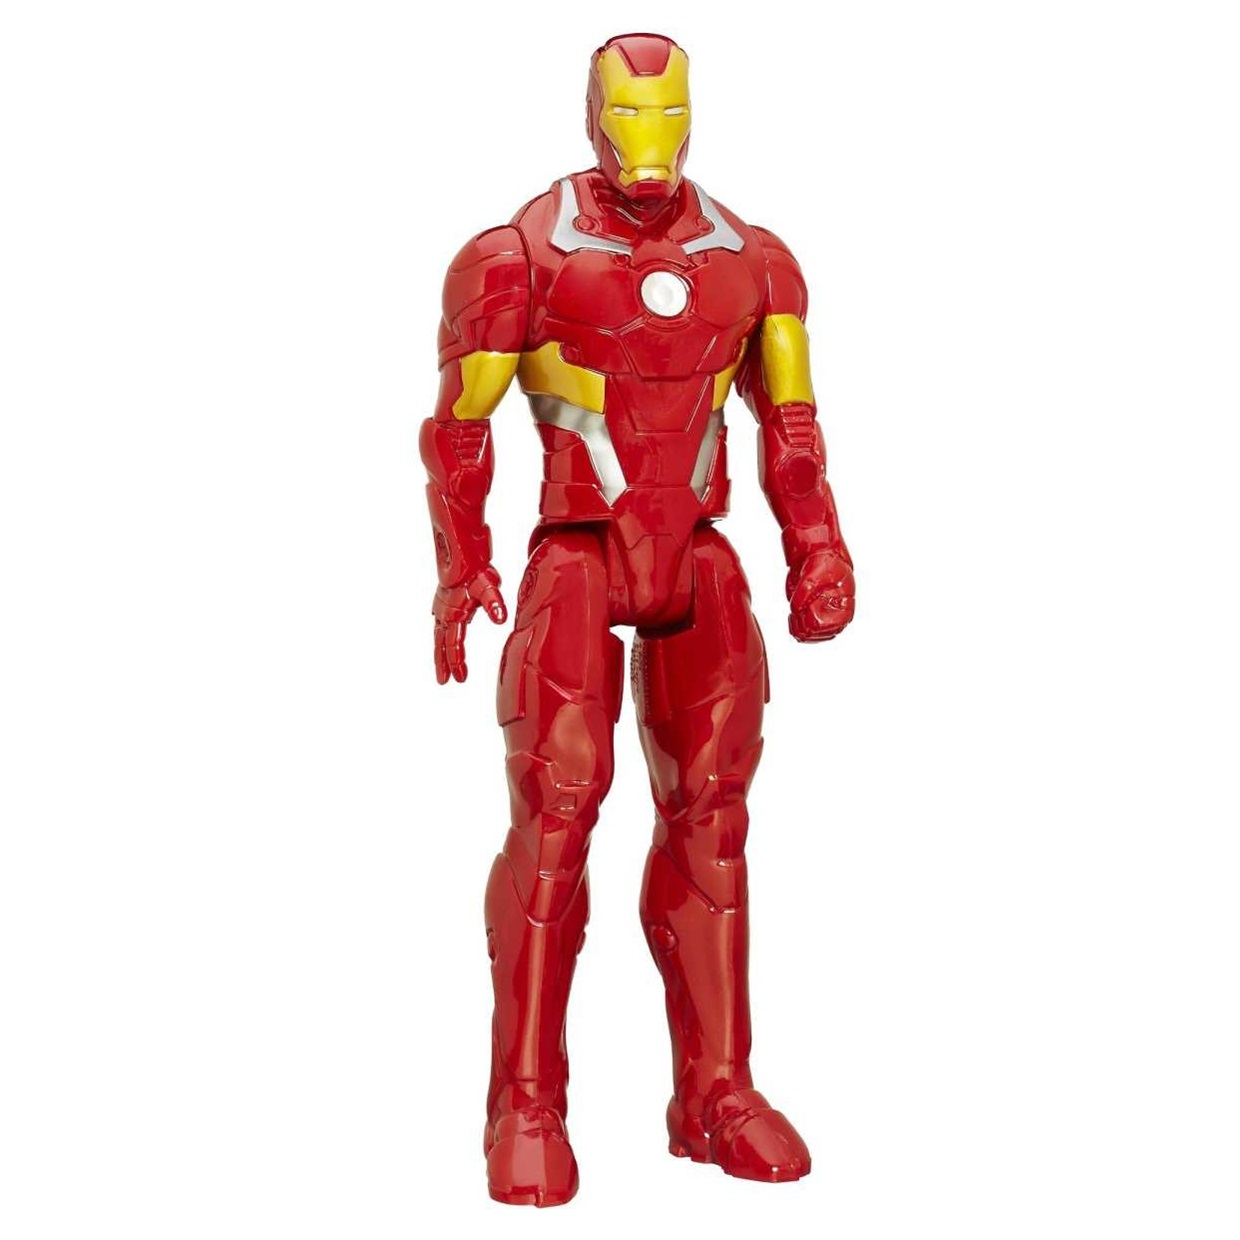 Iron Man Figura Marvel Avengers Titan Hero Series 12 PuLG